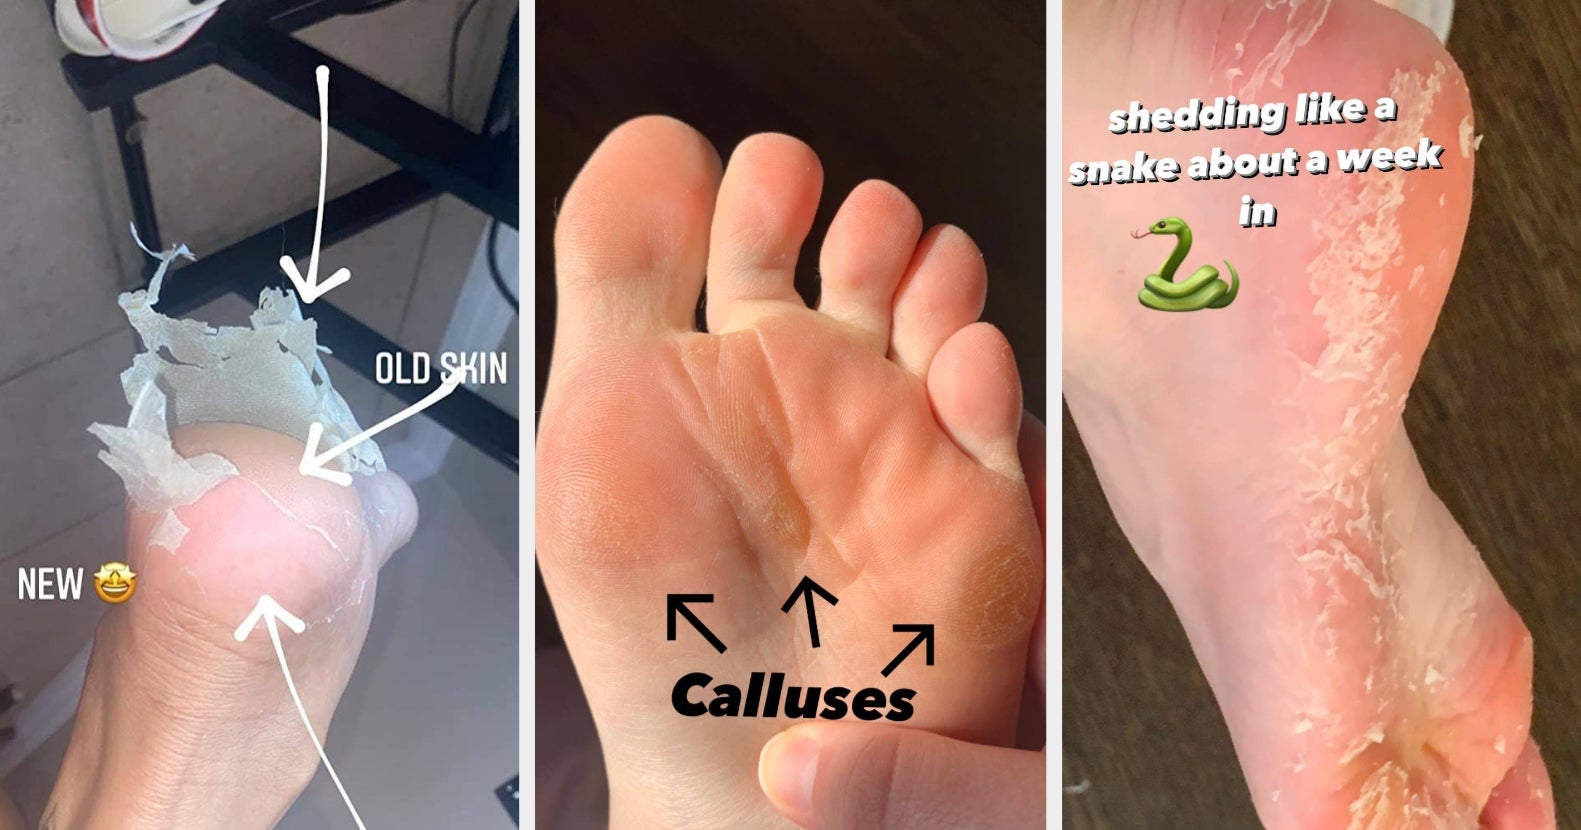 Baby Foot Peel Work Better - How to Do It - We Gotta Talk